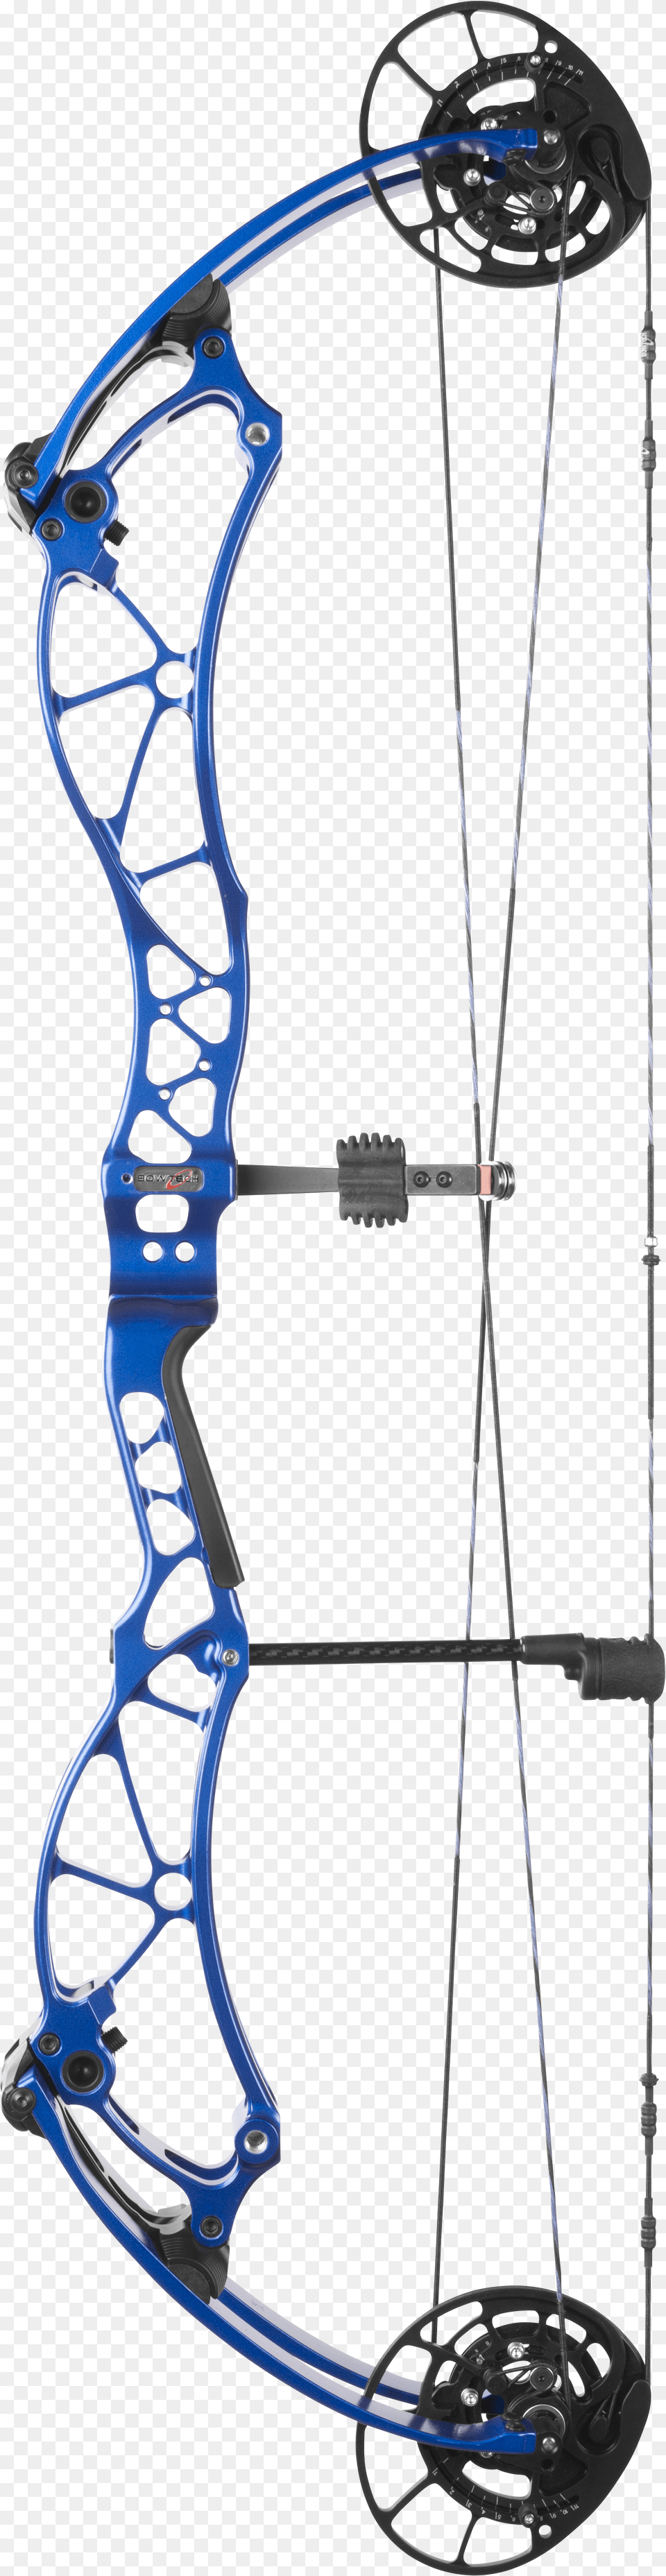 Bowtech Reckoning Compound Bow, Weapon, Archery, Sport, Archer Free Transparent Png